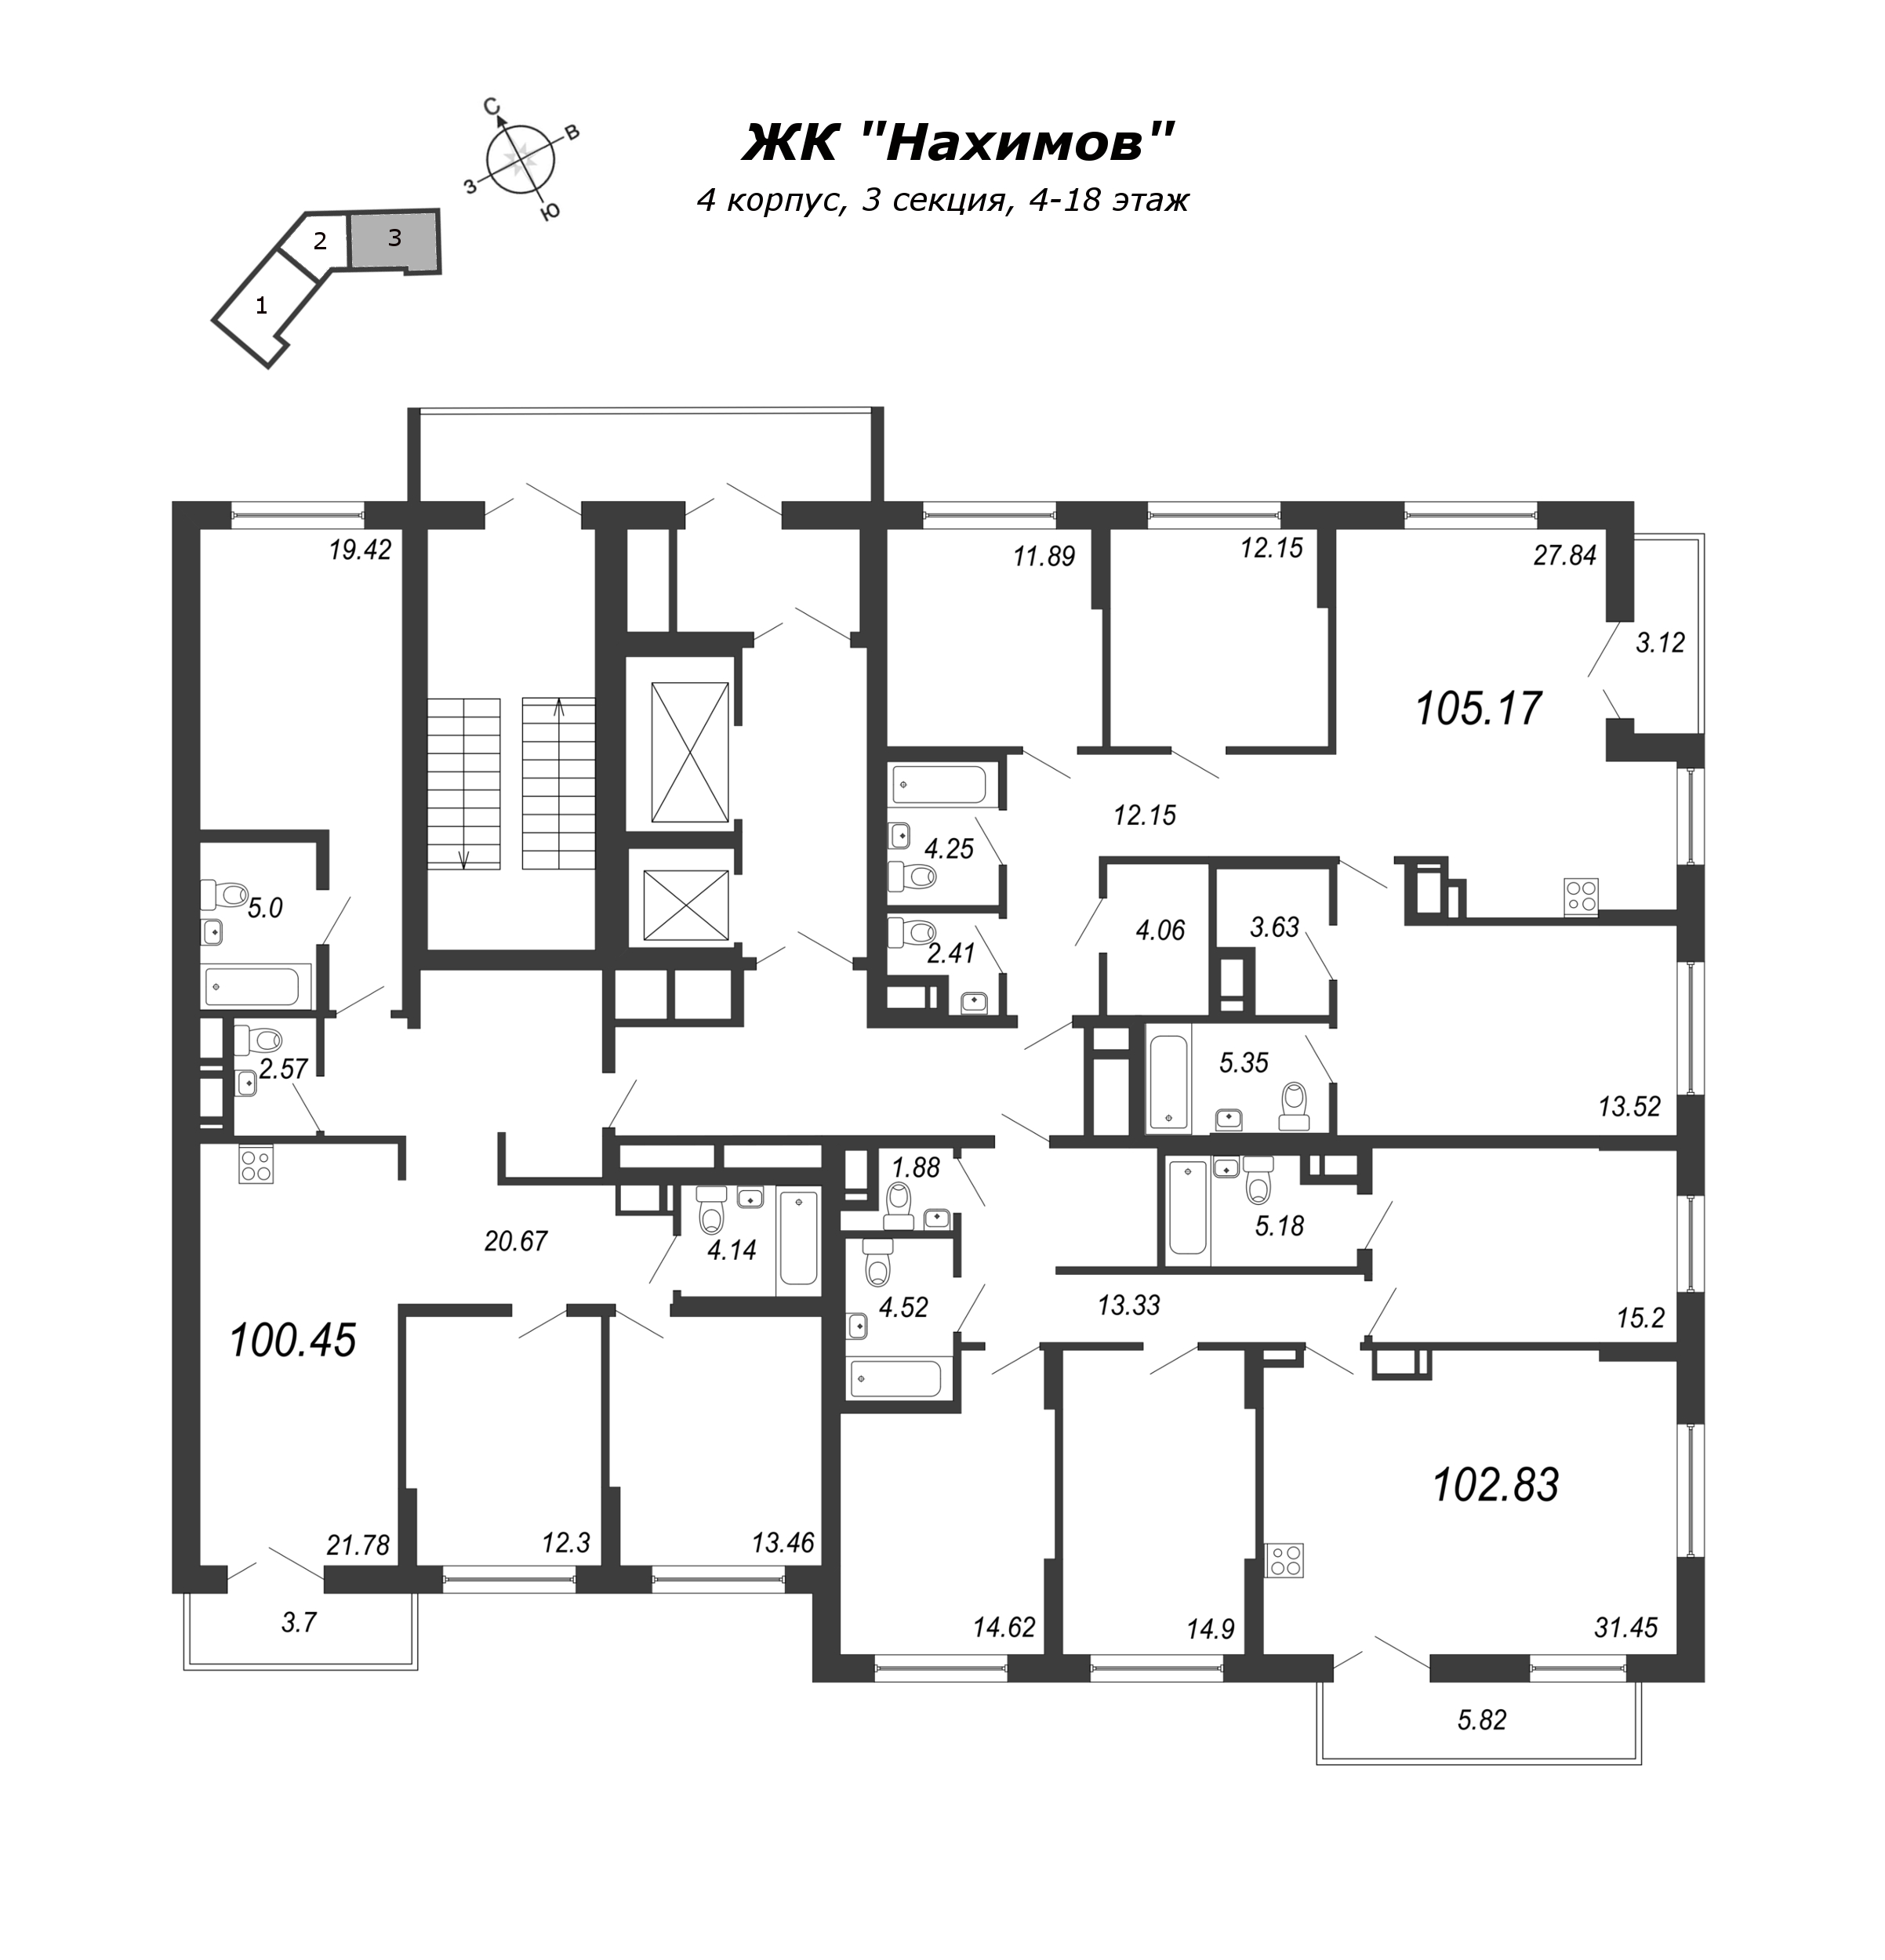 4-комнатная (Евро) квартира, 100.4 м² - планировка этажа